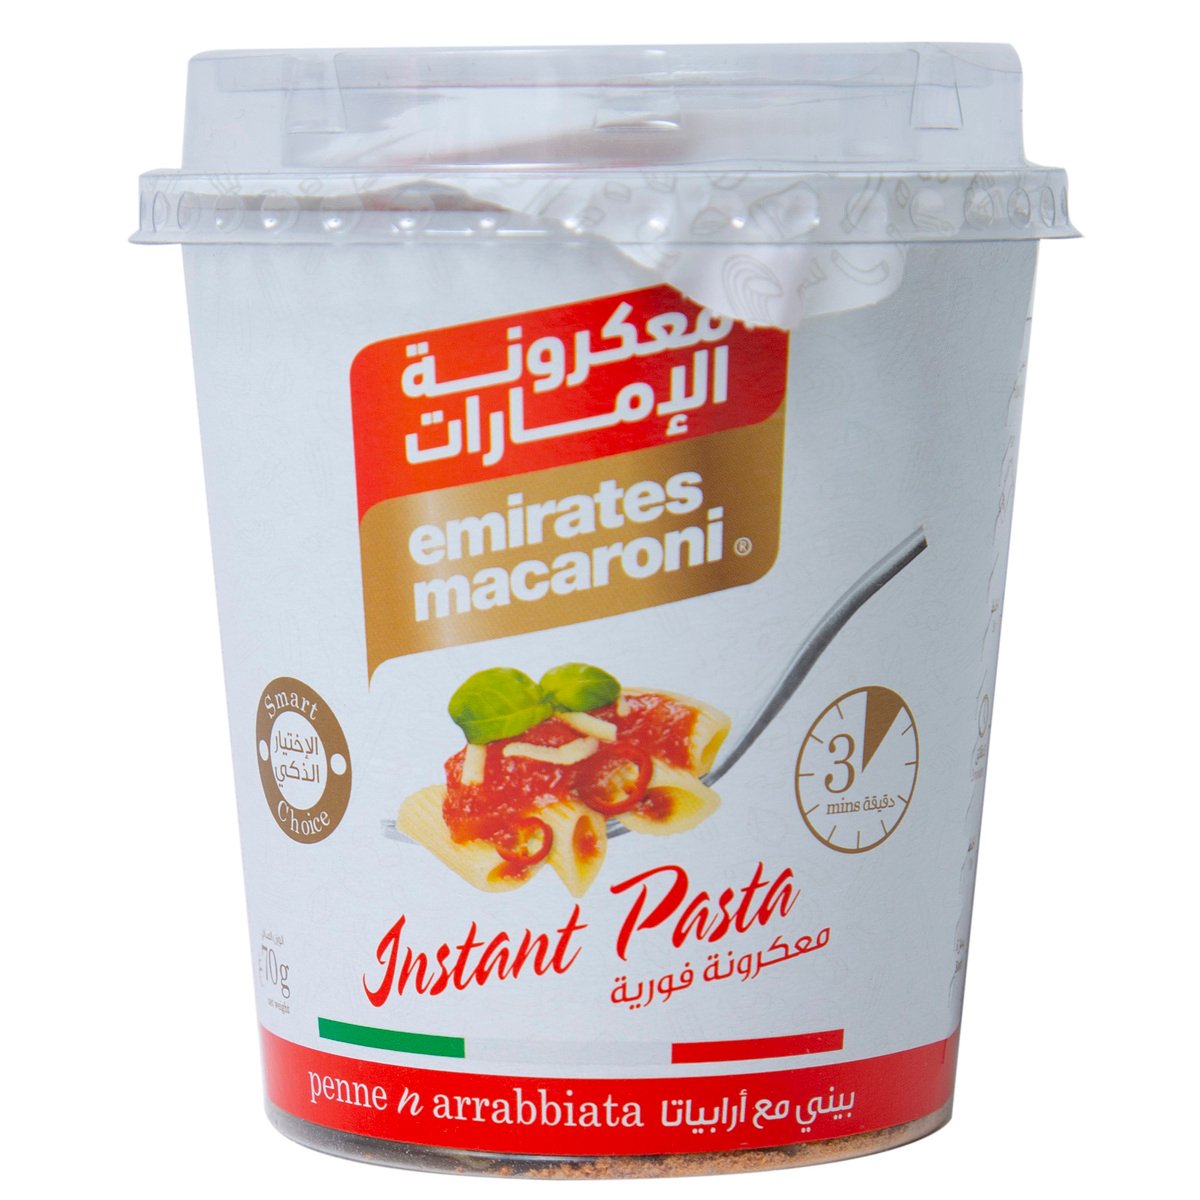 Emirates Macaroni Instant Pasta Penne N Arrabbiata 70 g